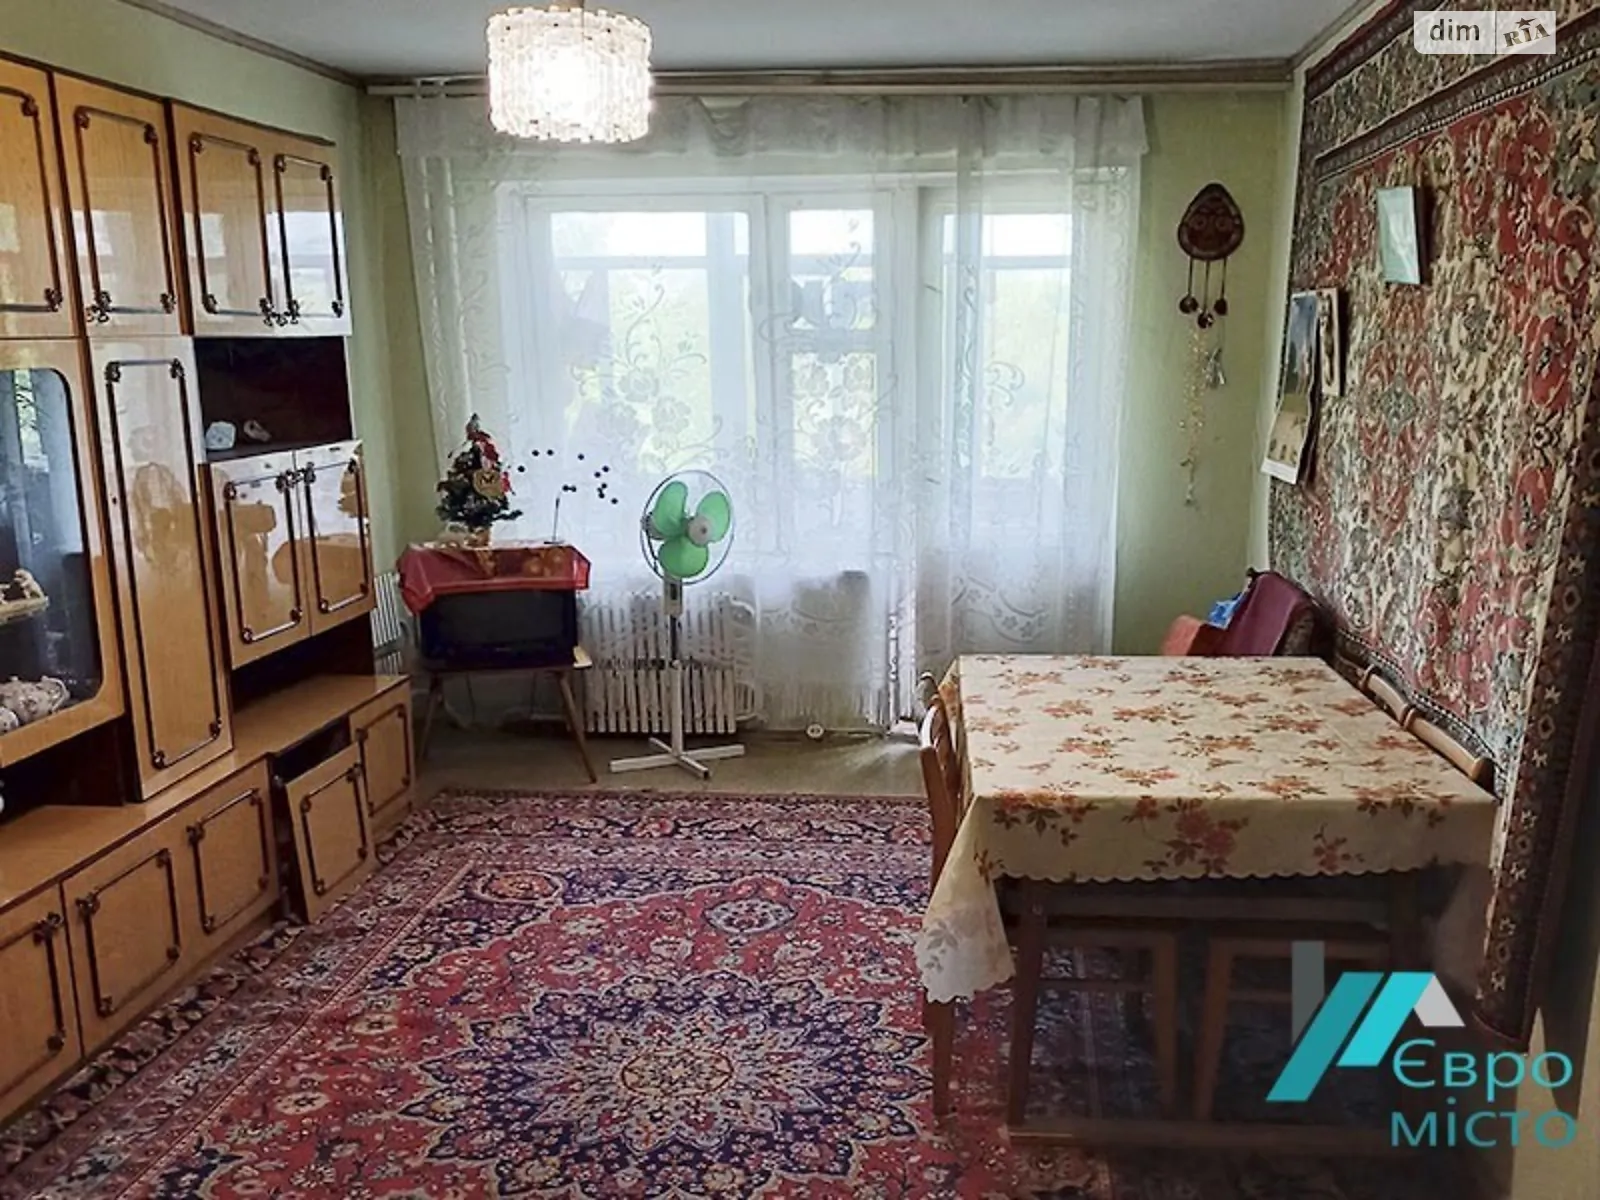 3-комнатная квартира 65.9 кв. м в Запорожье, ул. Днепровские пороги, 35 - фото 1